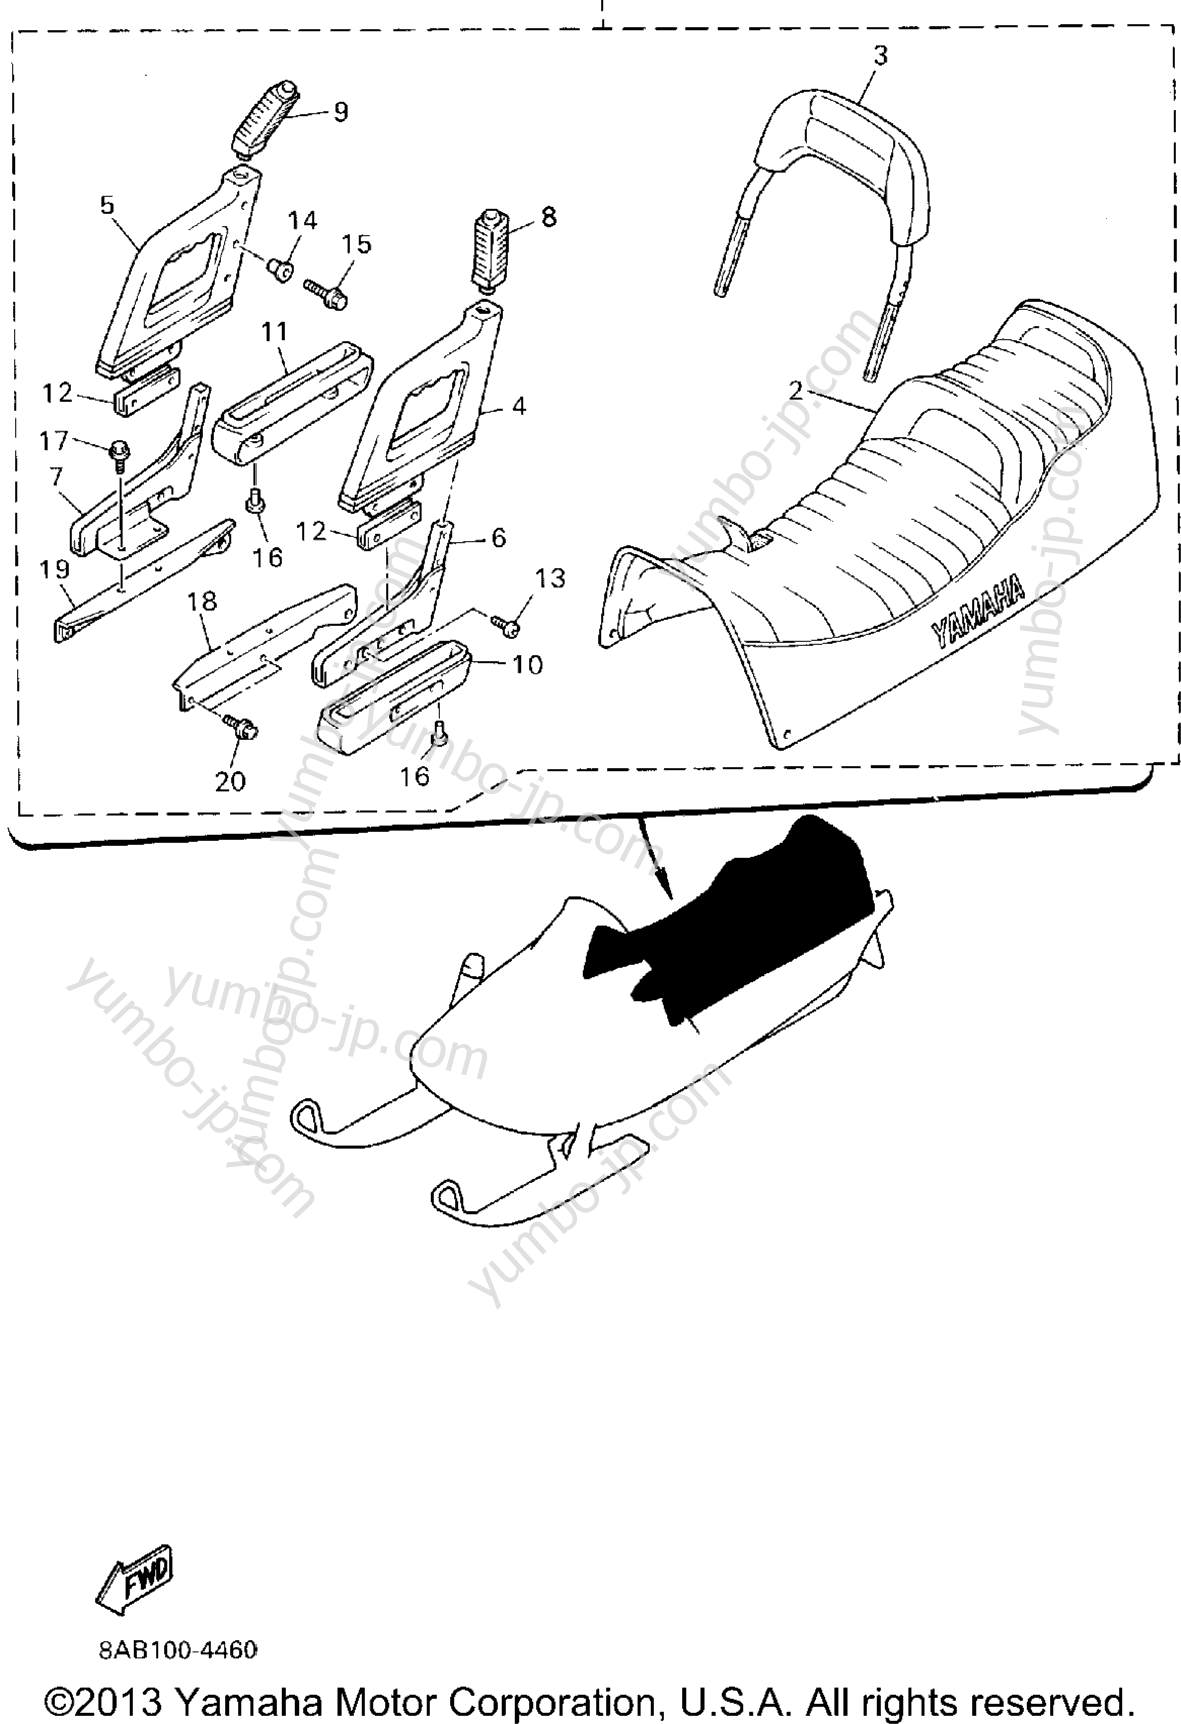 2-Up Seat Kit (Alternate) for snowmobiles YAMAHA VMAX 600 DX (VX600DXU) 1994 year